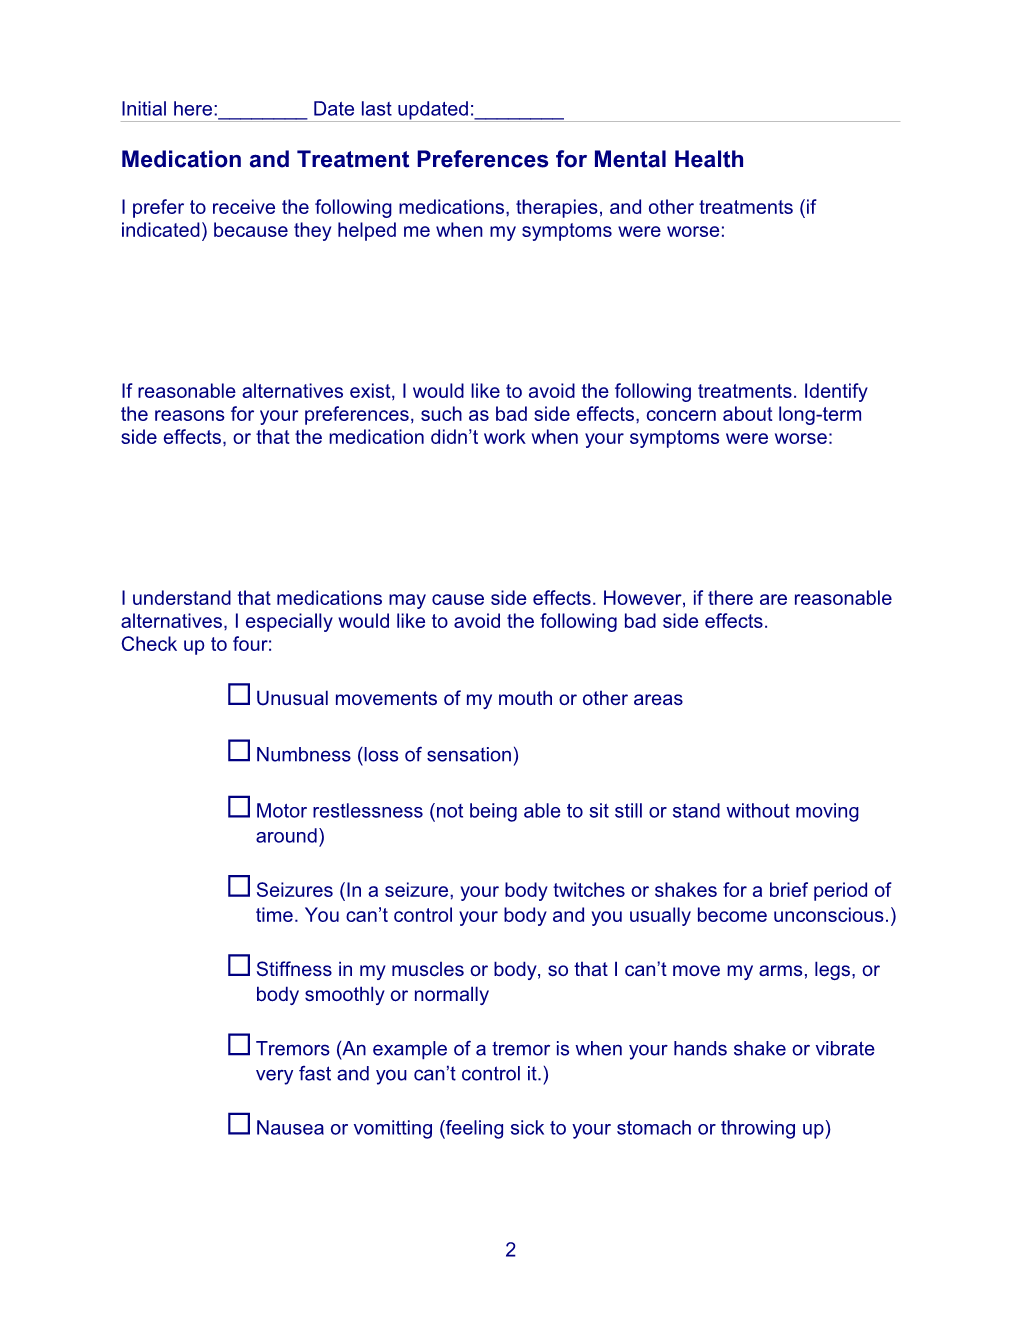 VA Advance Directive Worksheet - Mental Health Preferences - US Department of Veterans Affairs